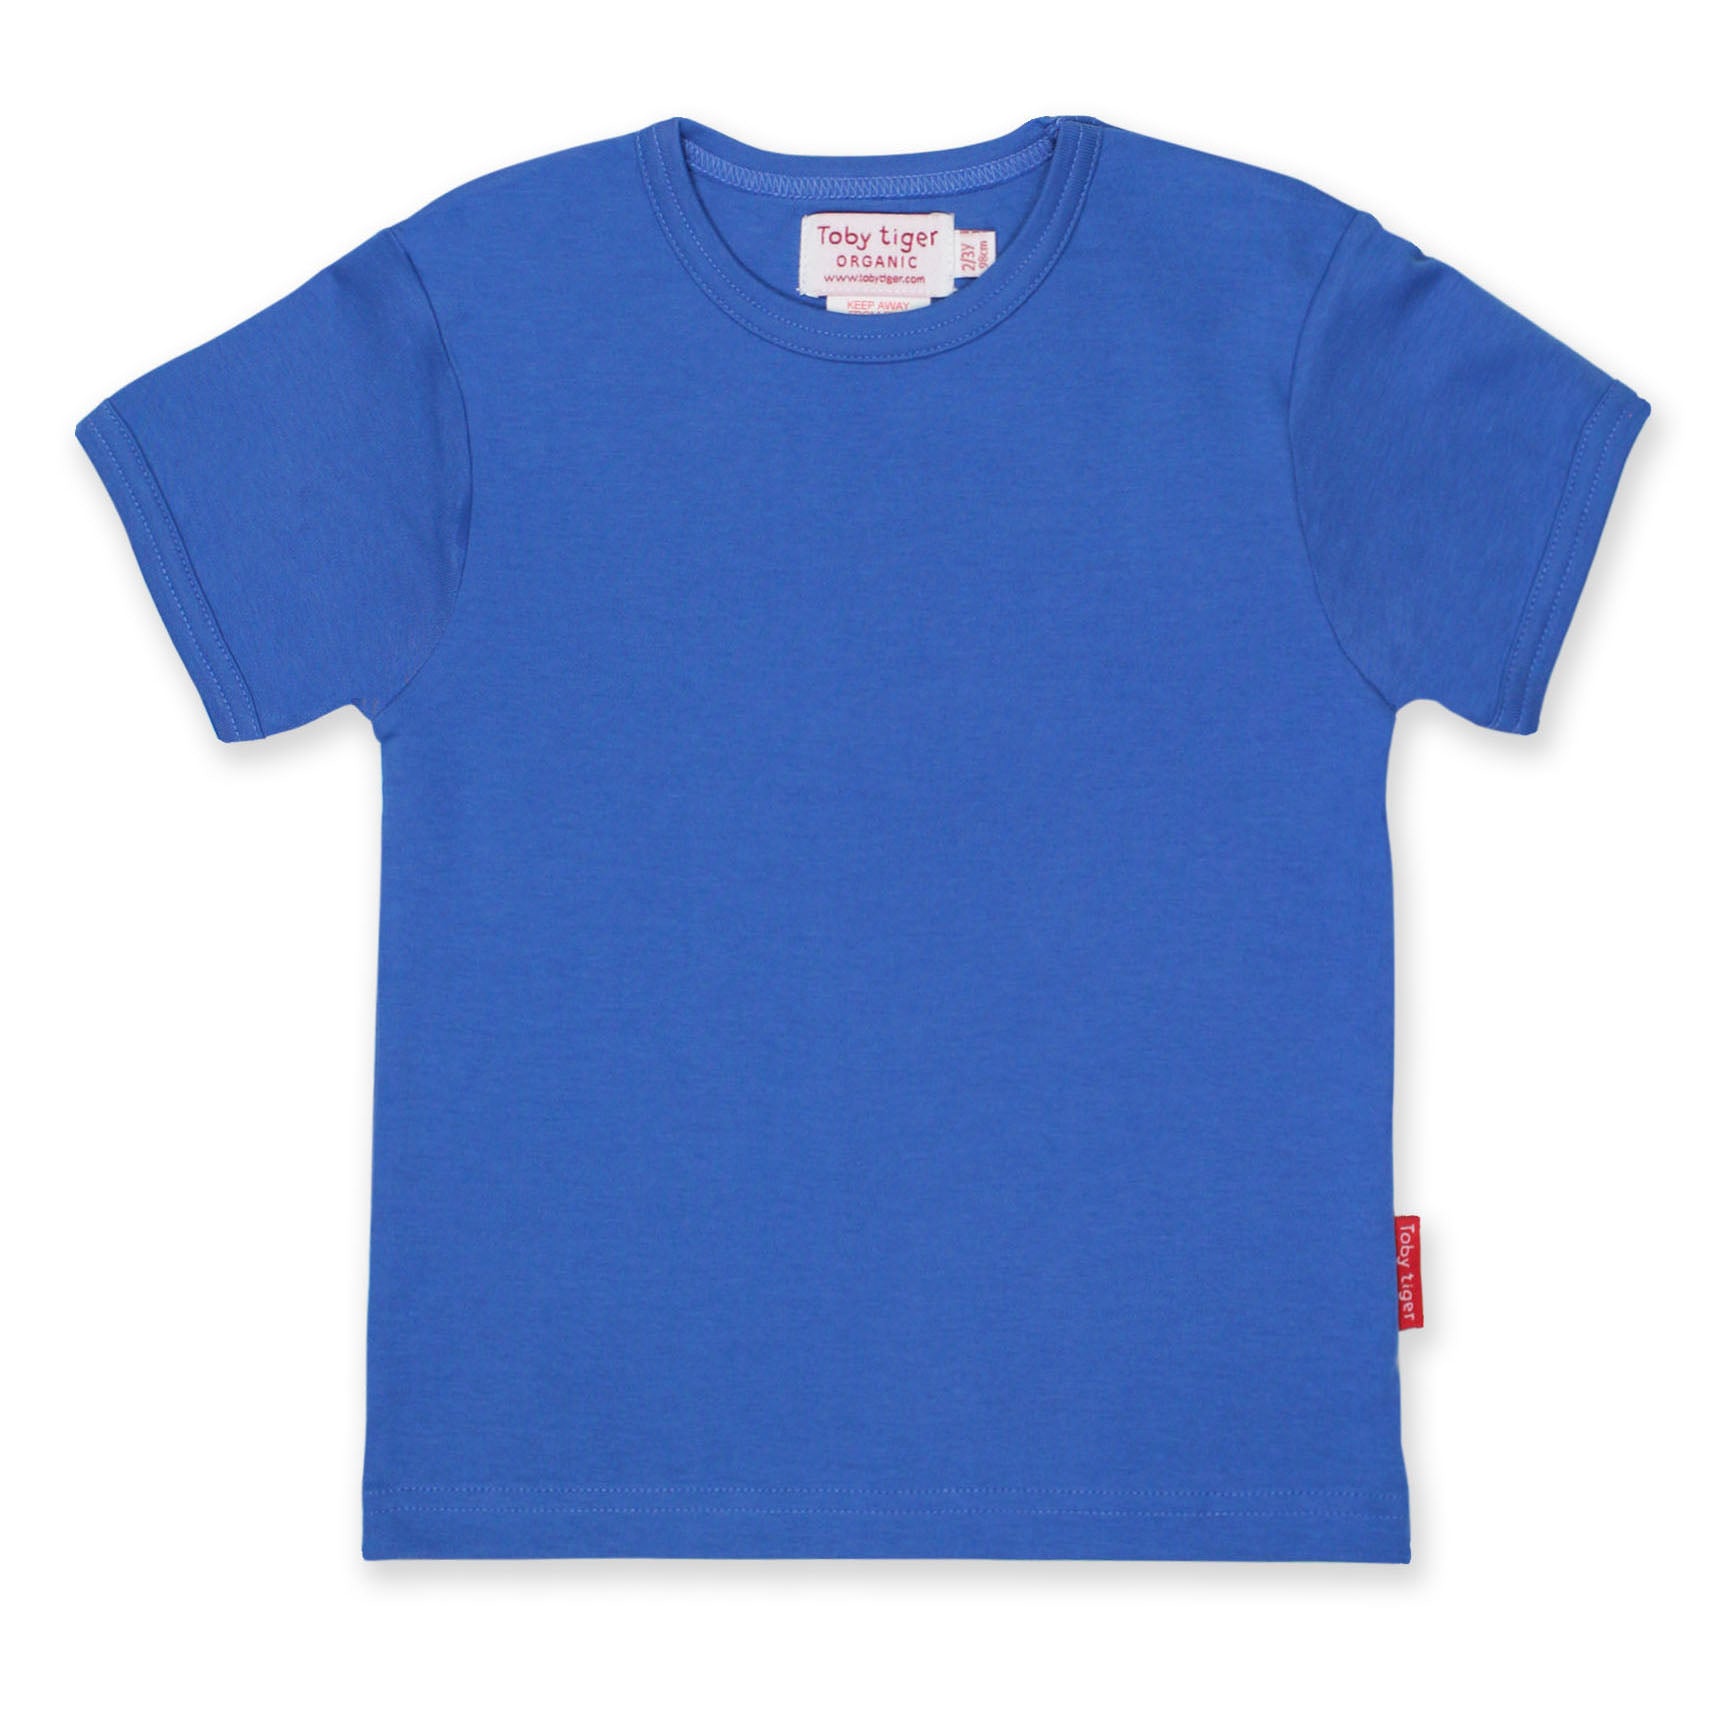 Toby Tiger basic blue short sleeve t-shirt